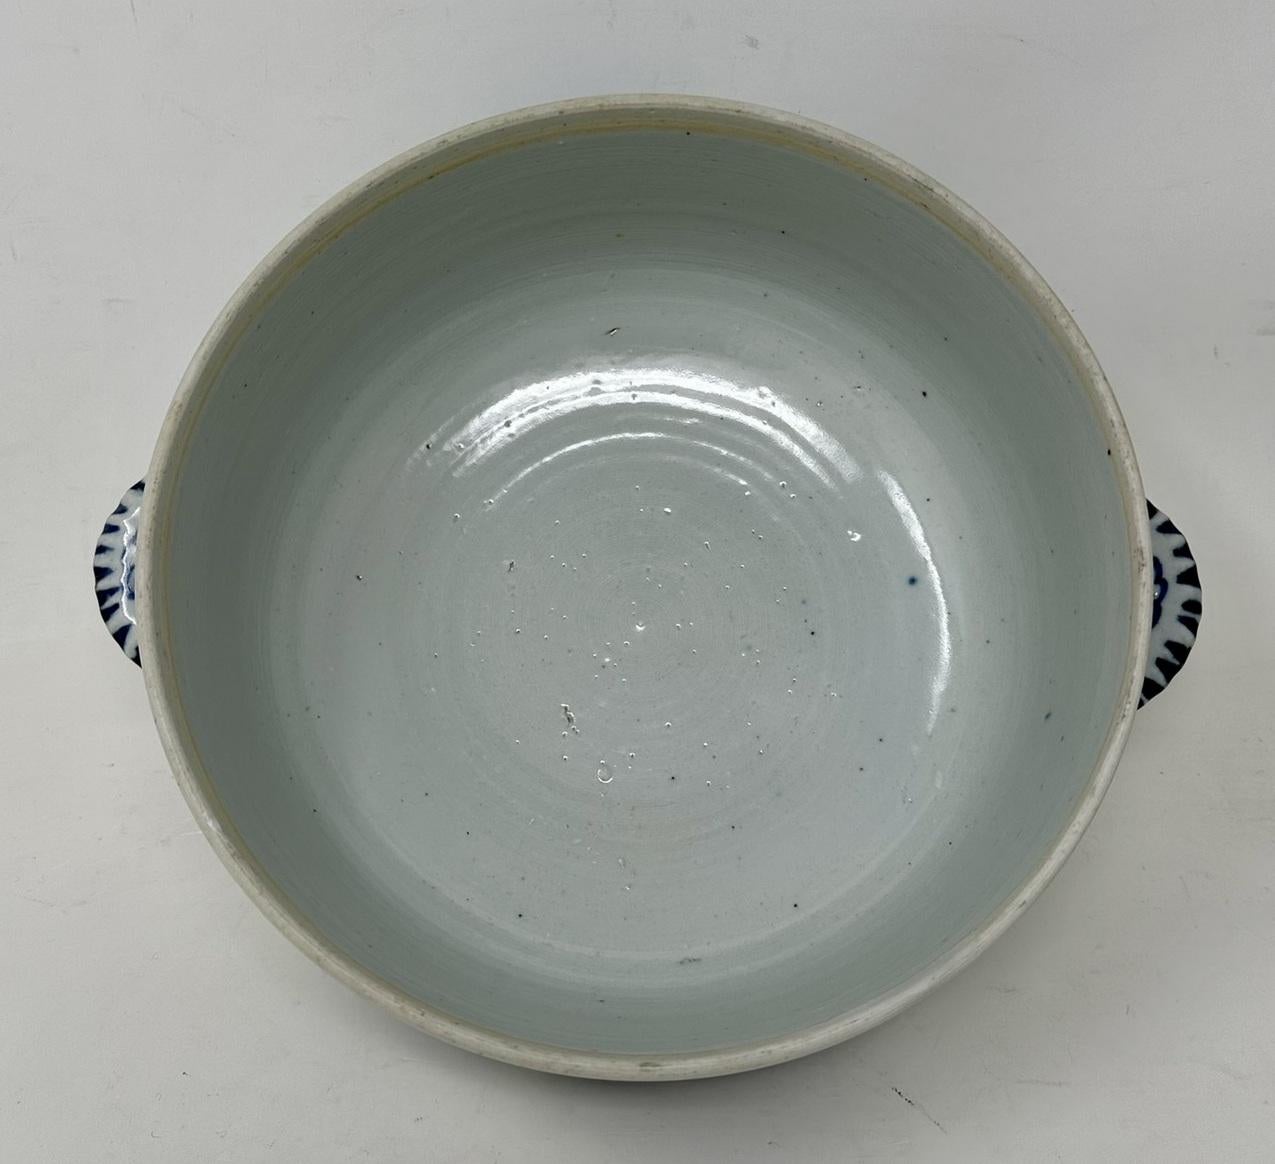 Antique Chinese Export Porcelain Blue White Chien Lung Soup Tureen Centerpiece For Sale 1